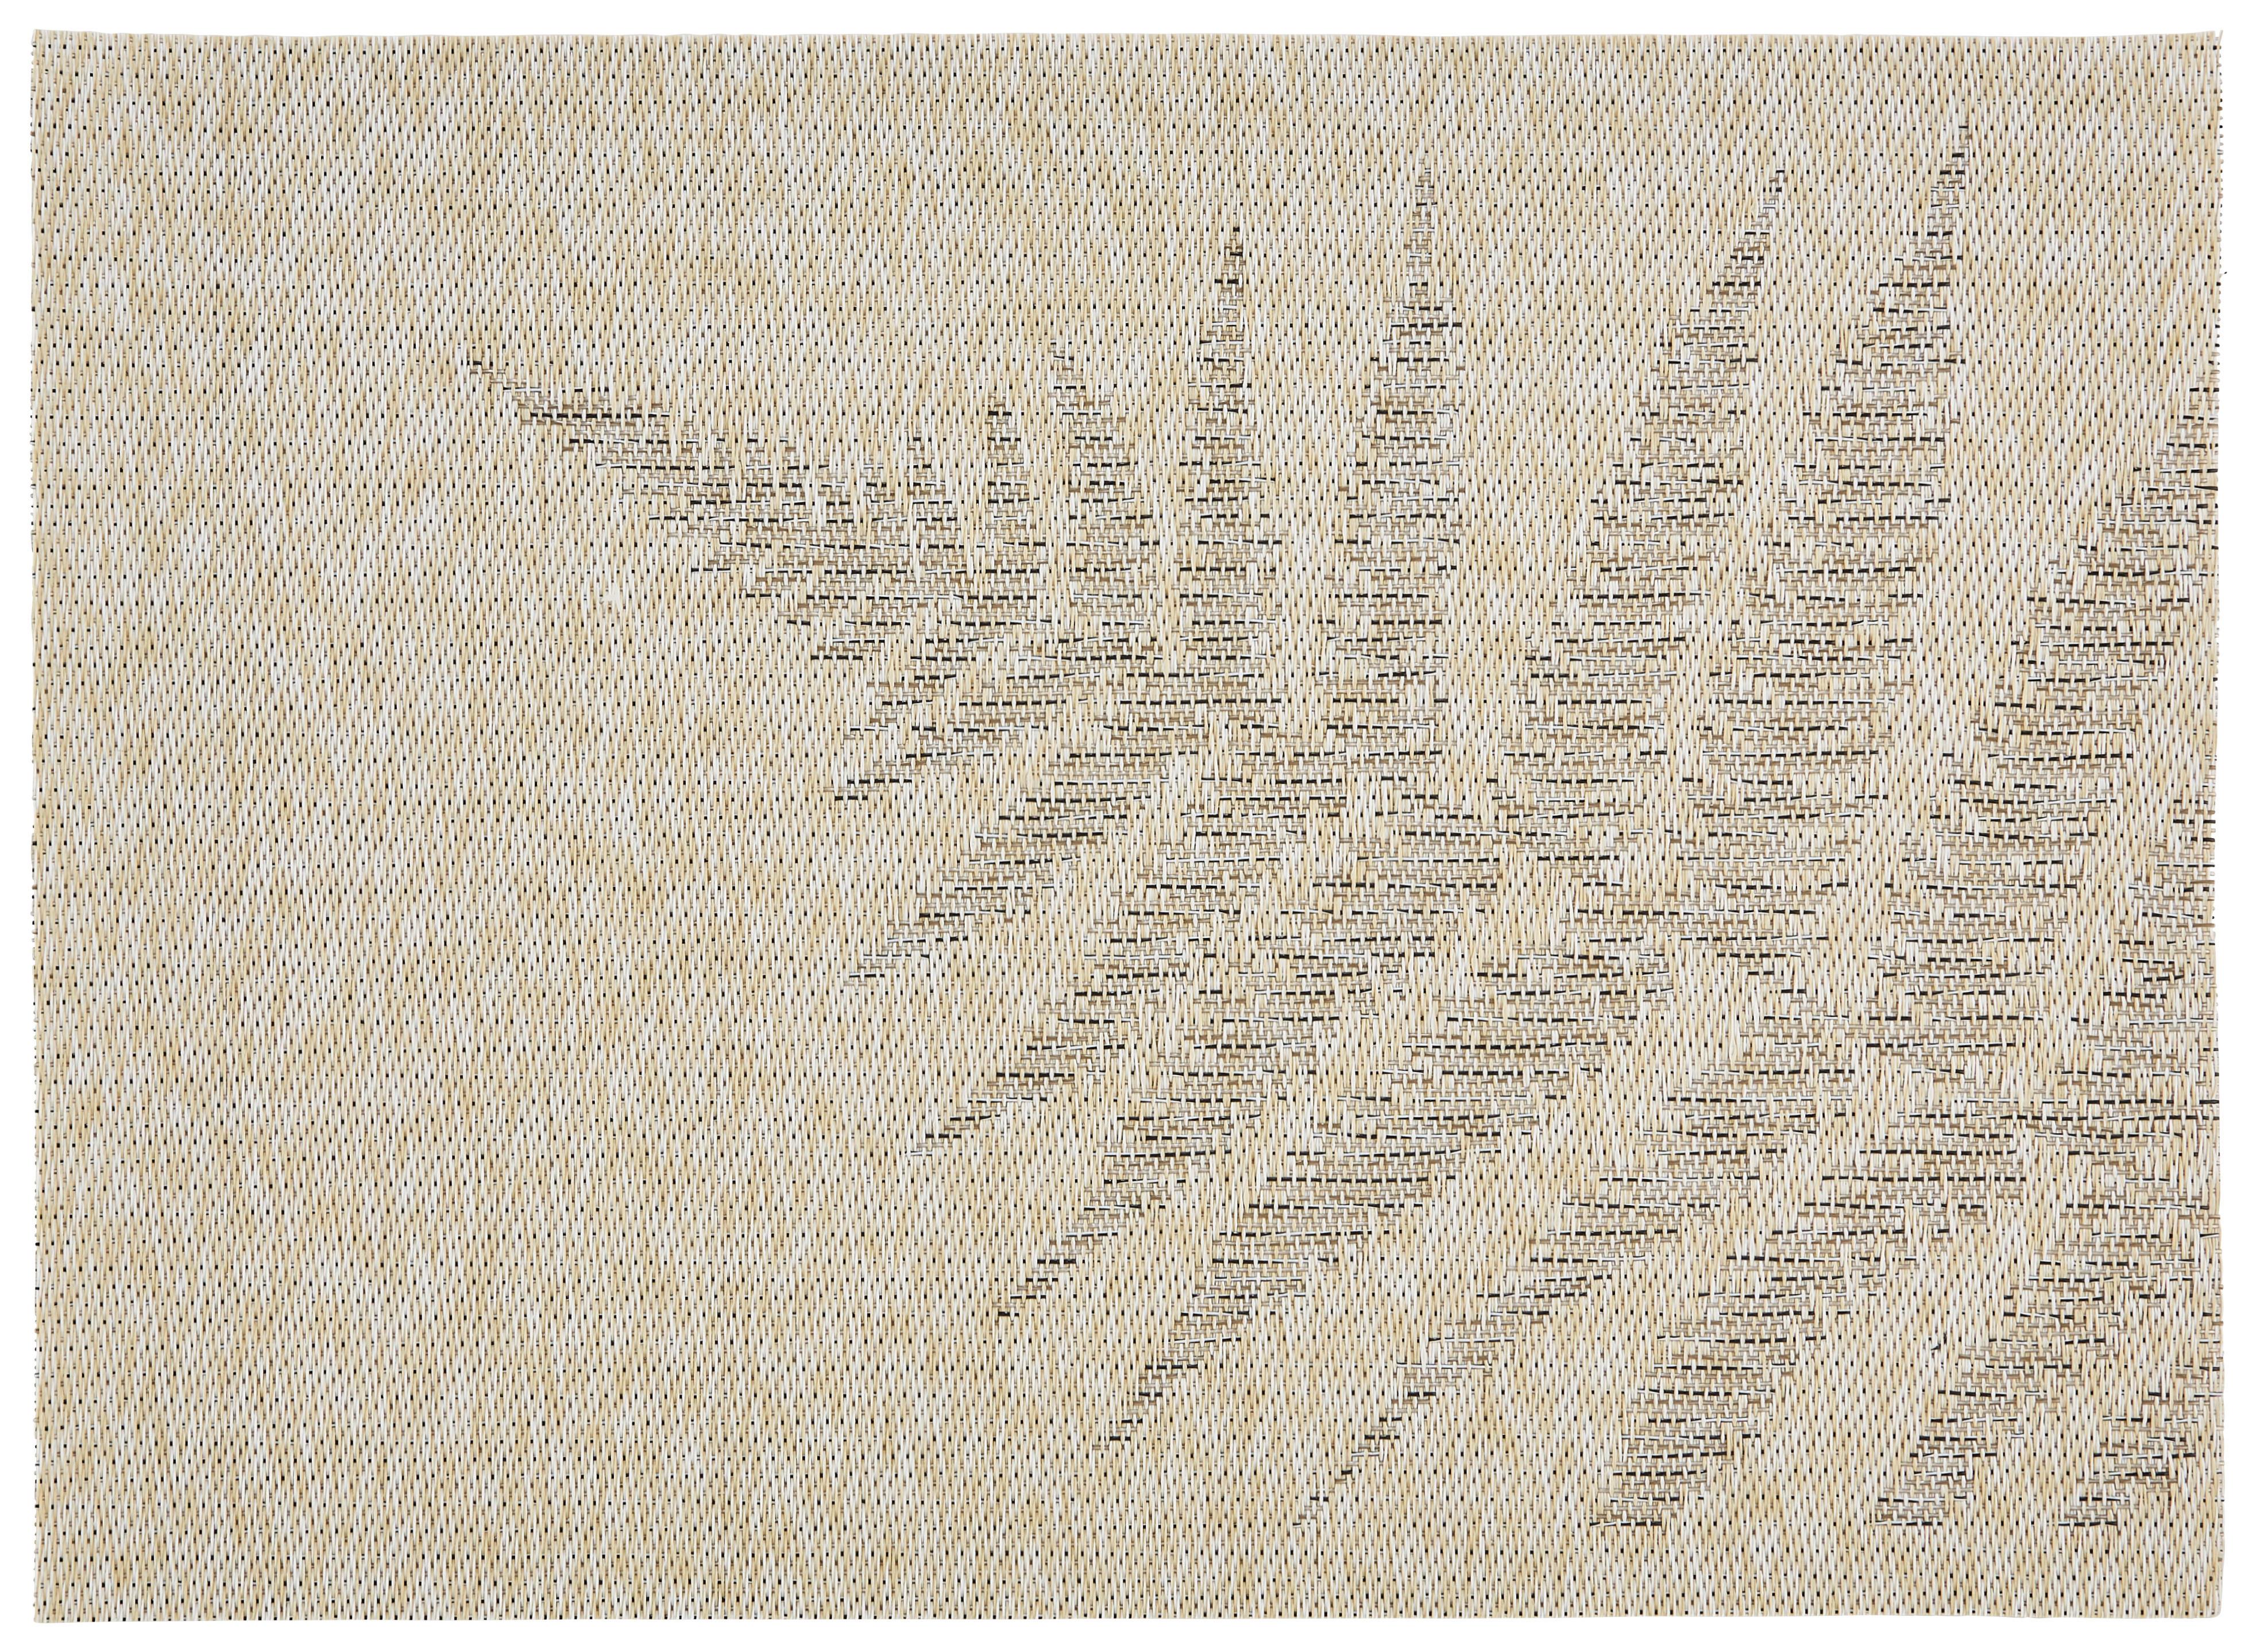 Suport farfurie Mary - bej, Basics, textil (33/45cm) - Modern Living